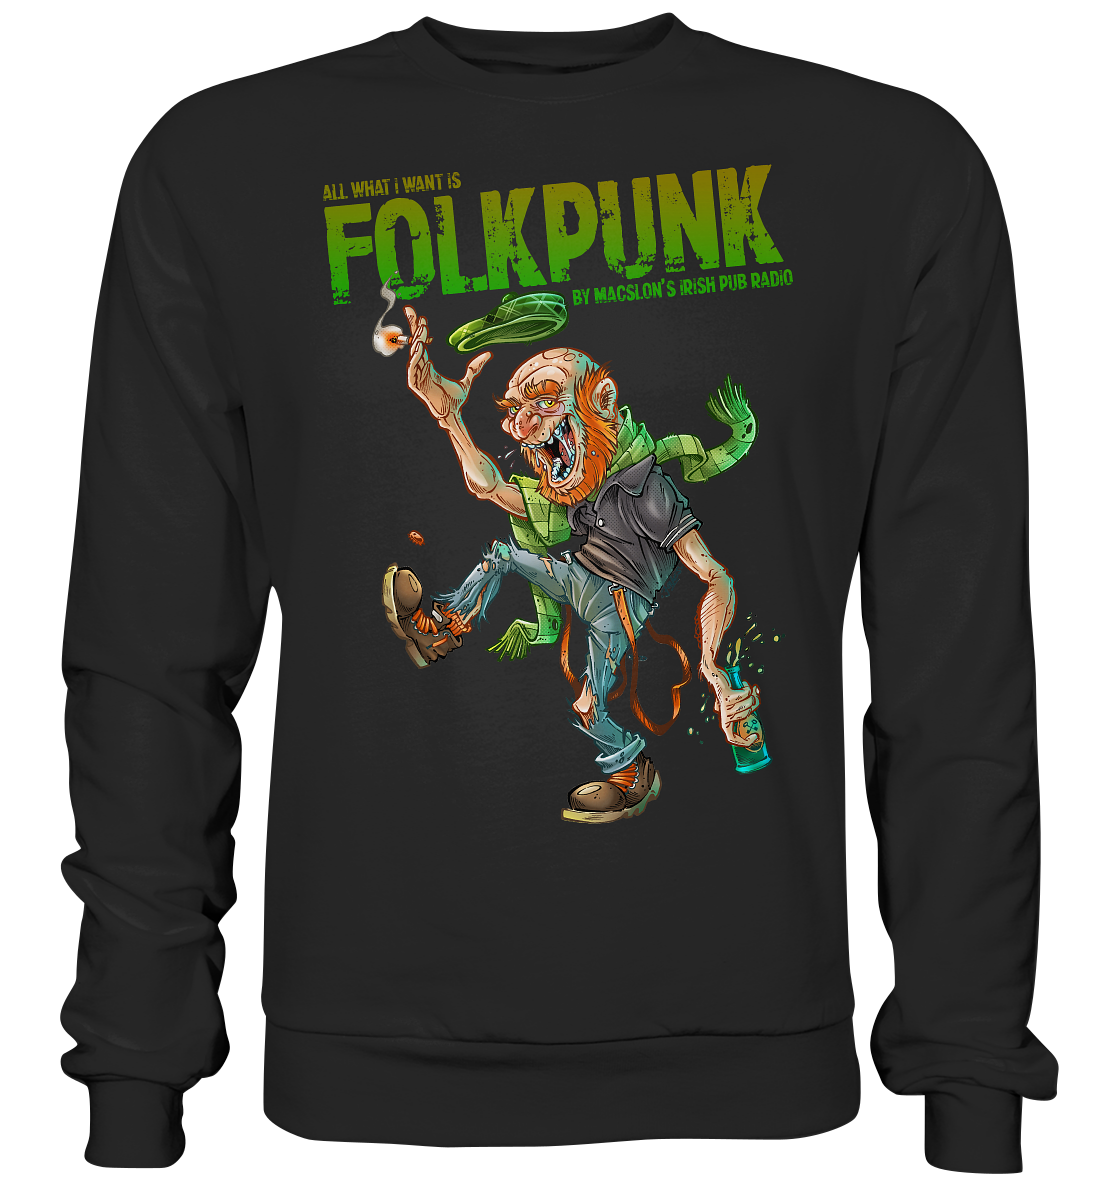 All What I Want Is "Folkpunk" - Premium Sweatshirt